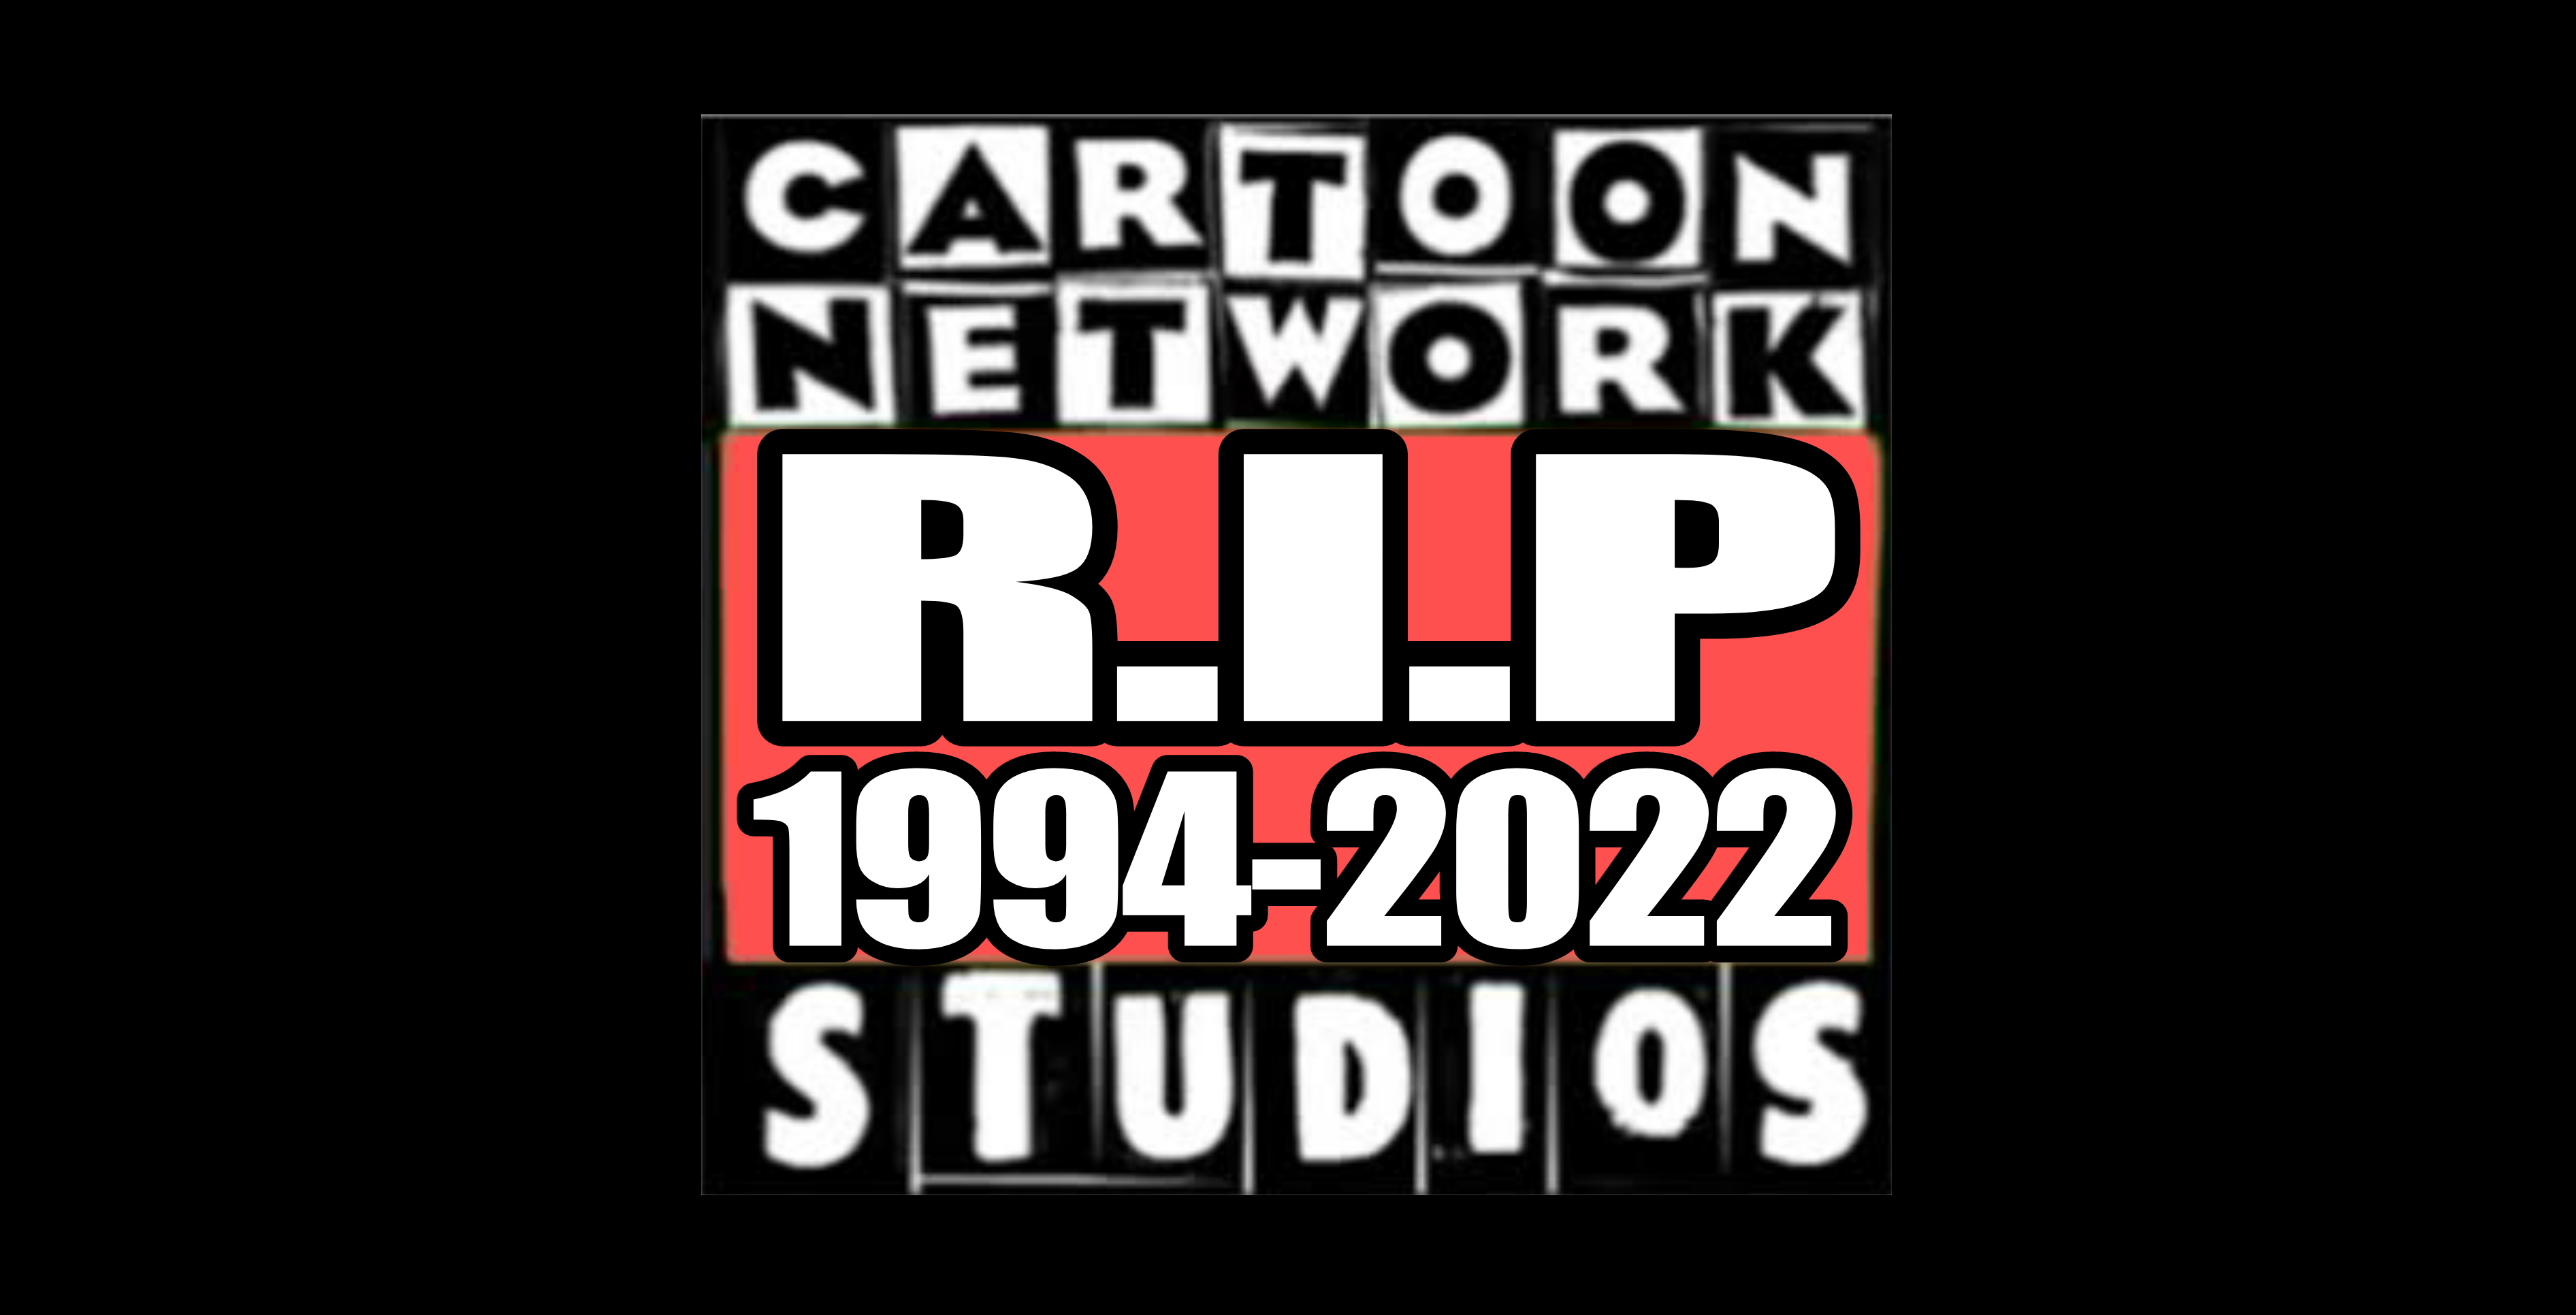  Cartoon Network Studios 1994-2022 by facussparkle2002 on DeviantArt